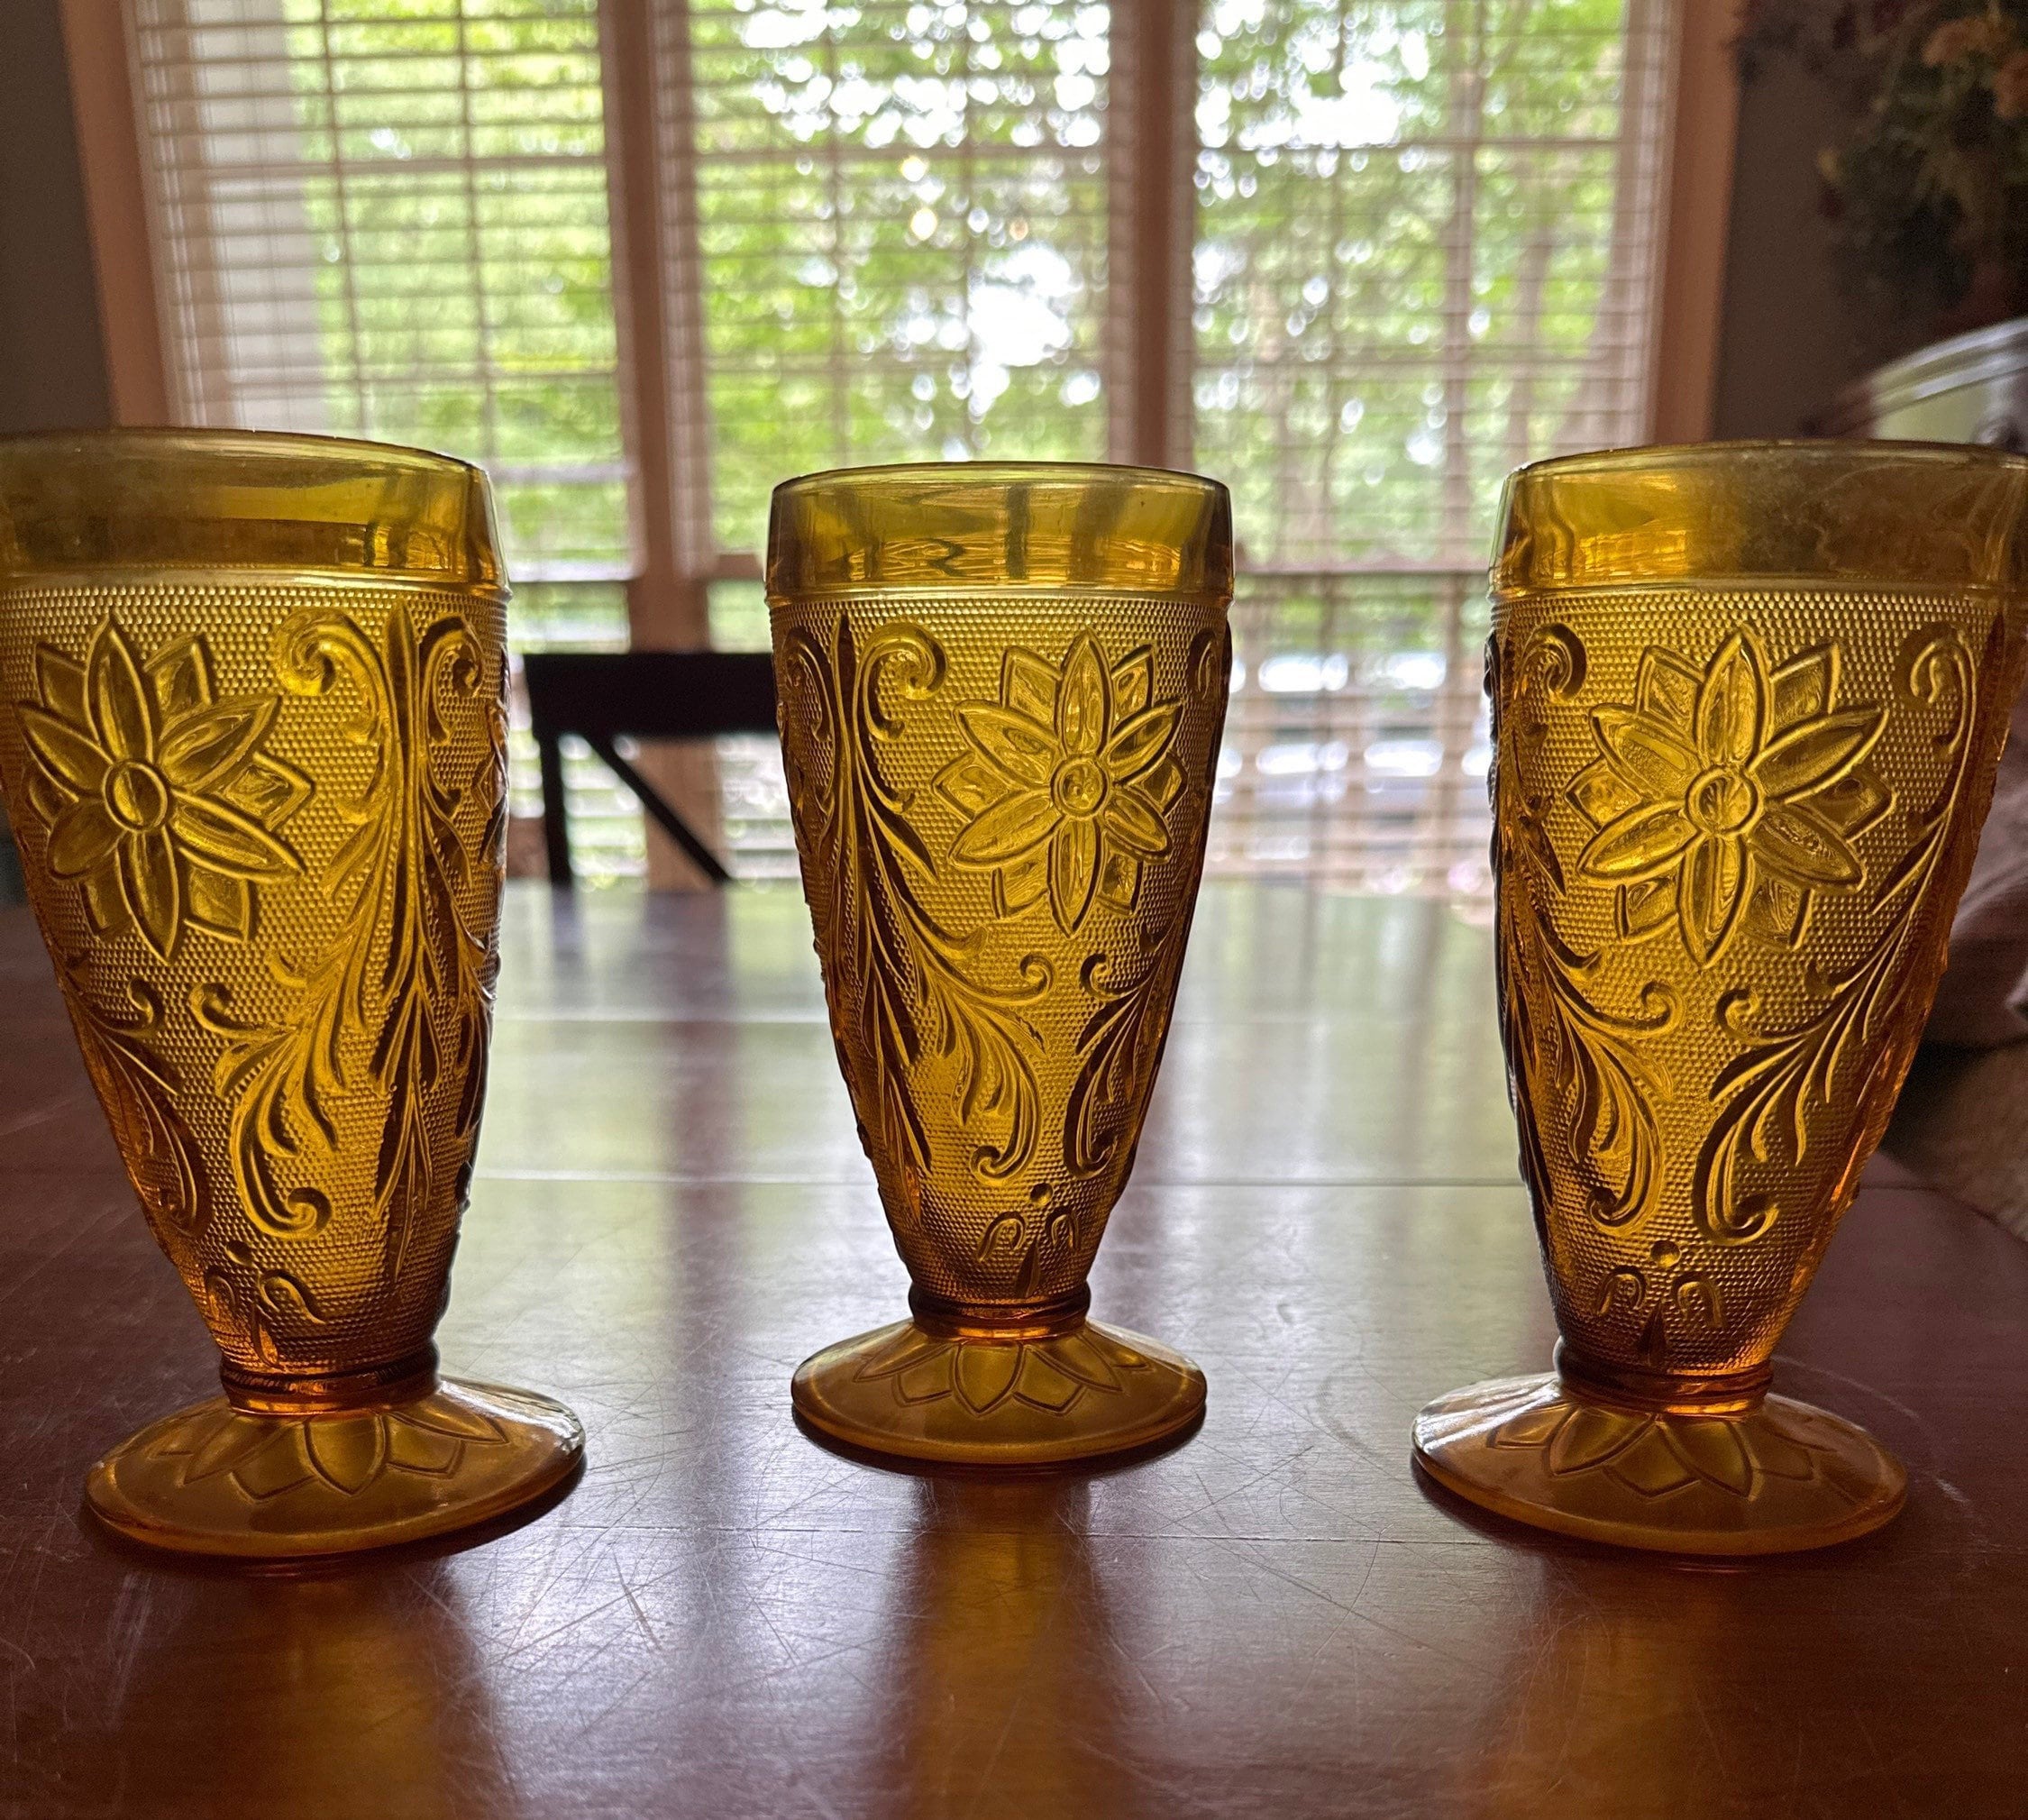 6 Indiana Glass Company Amber Glass Tea Cups / Tiara Sandwich Amber Tea Cups  / Thick Amber Glass Mugs / Vintage Tea Cup Set / Boho Tea Cups -  Norway